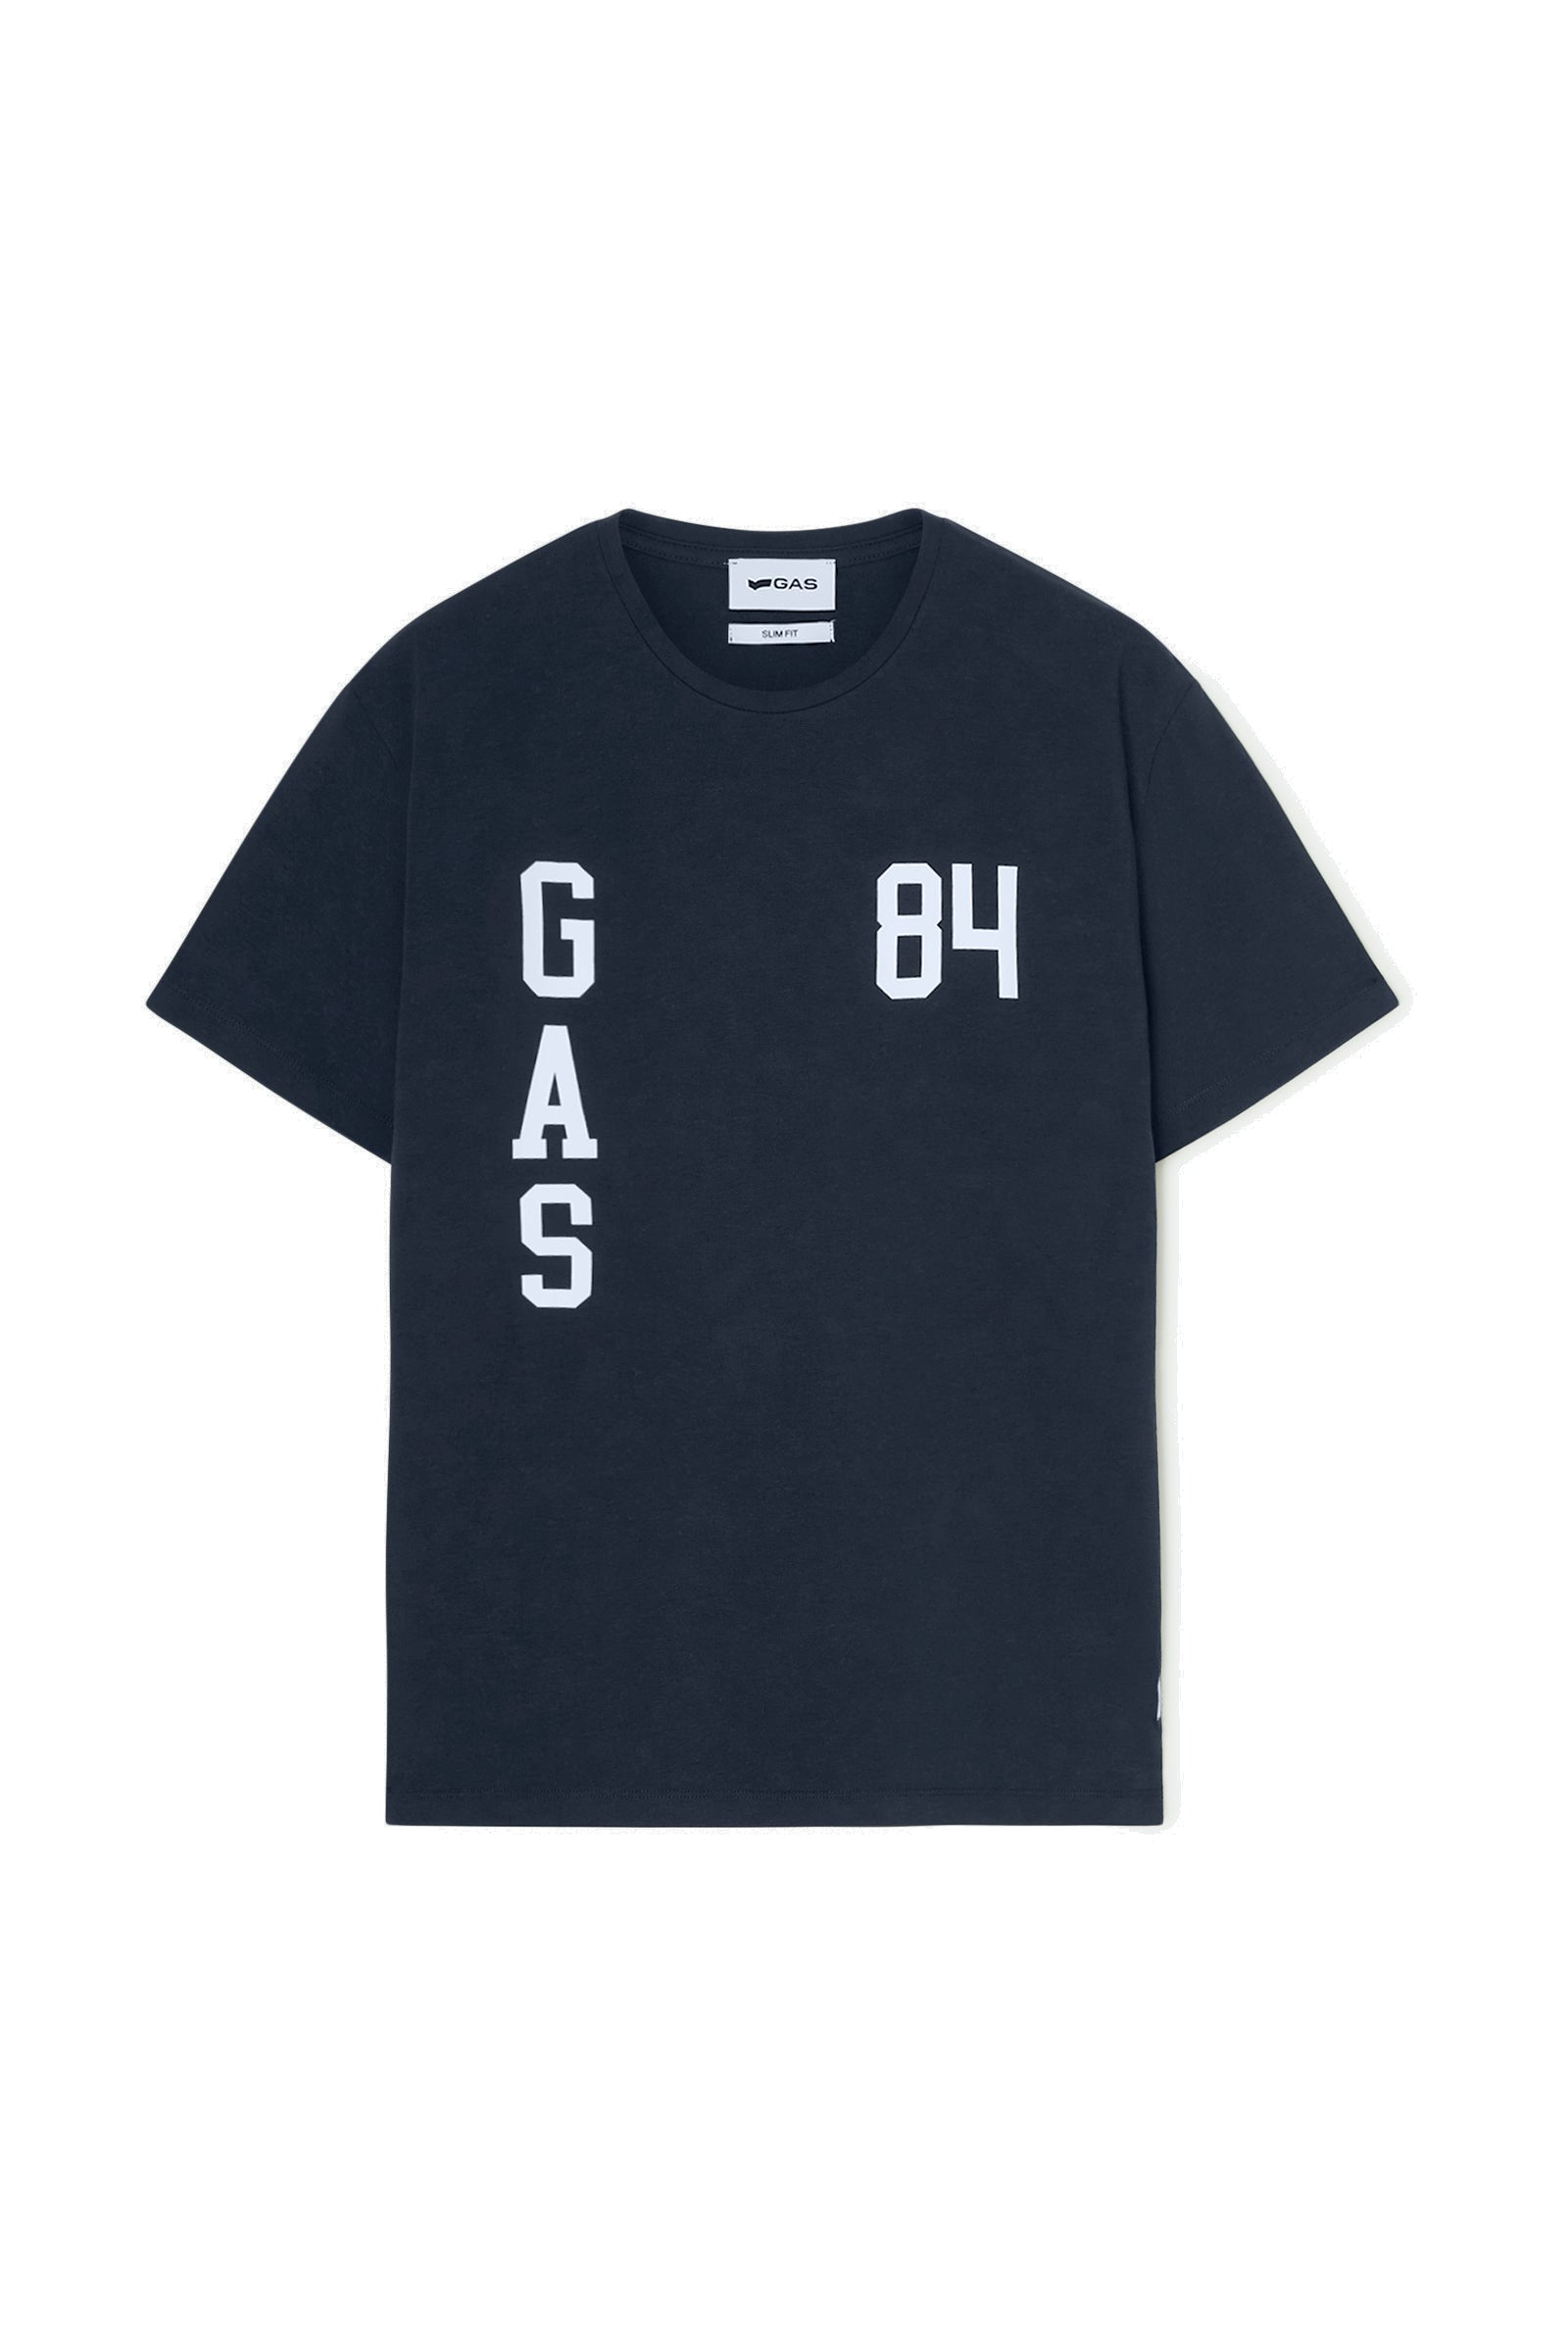 Scuba/S Brand G84 T-Shirt in Navy Blue T-Shirts GAS   